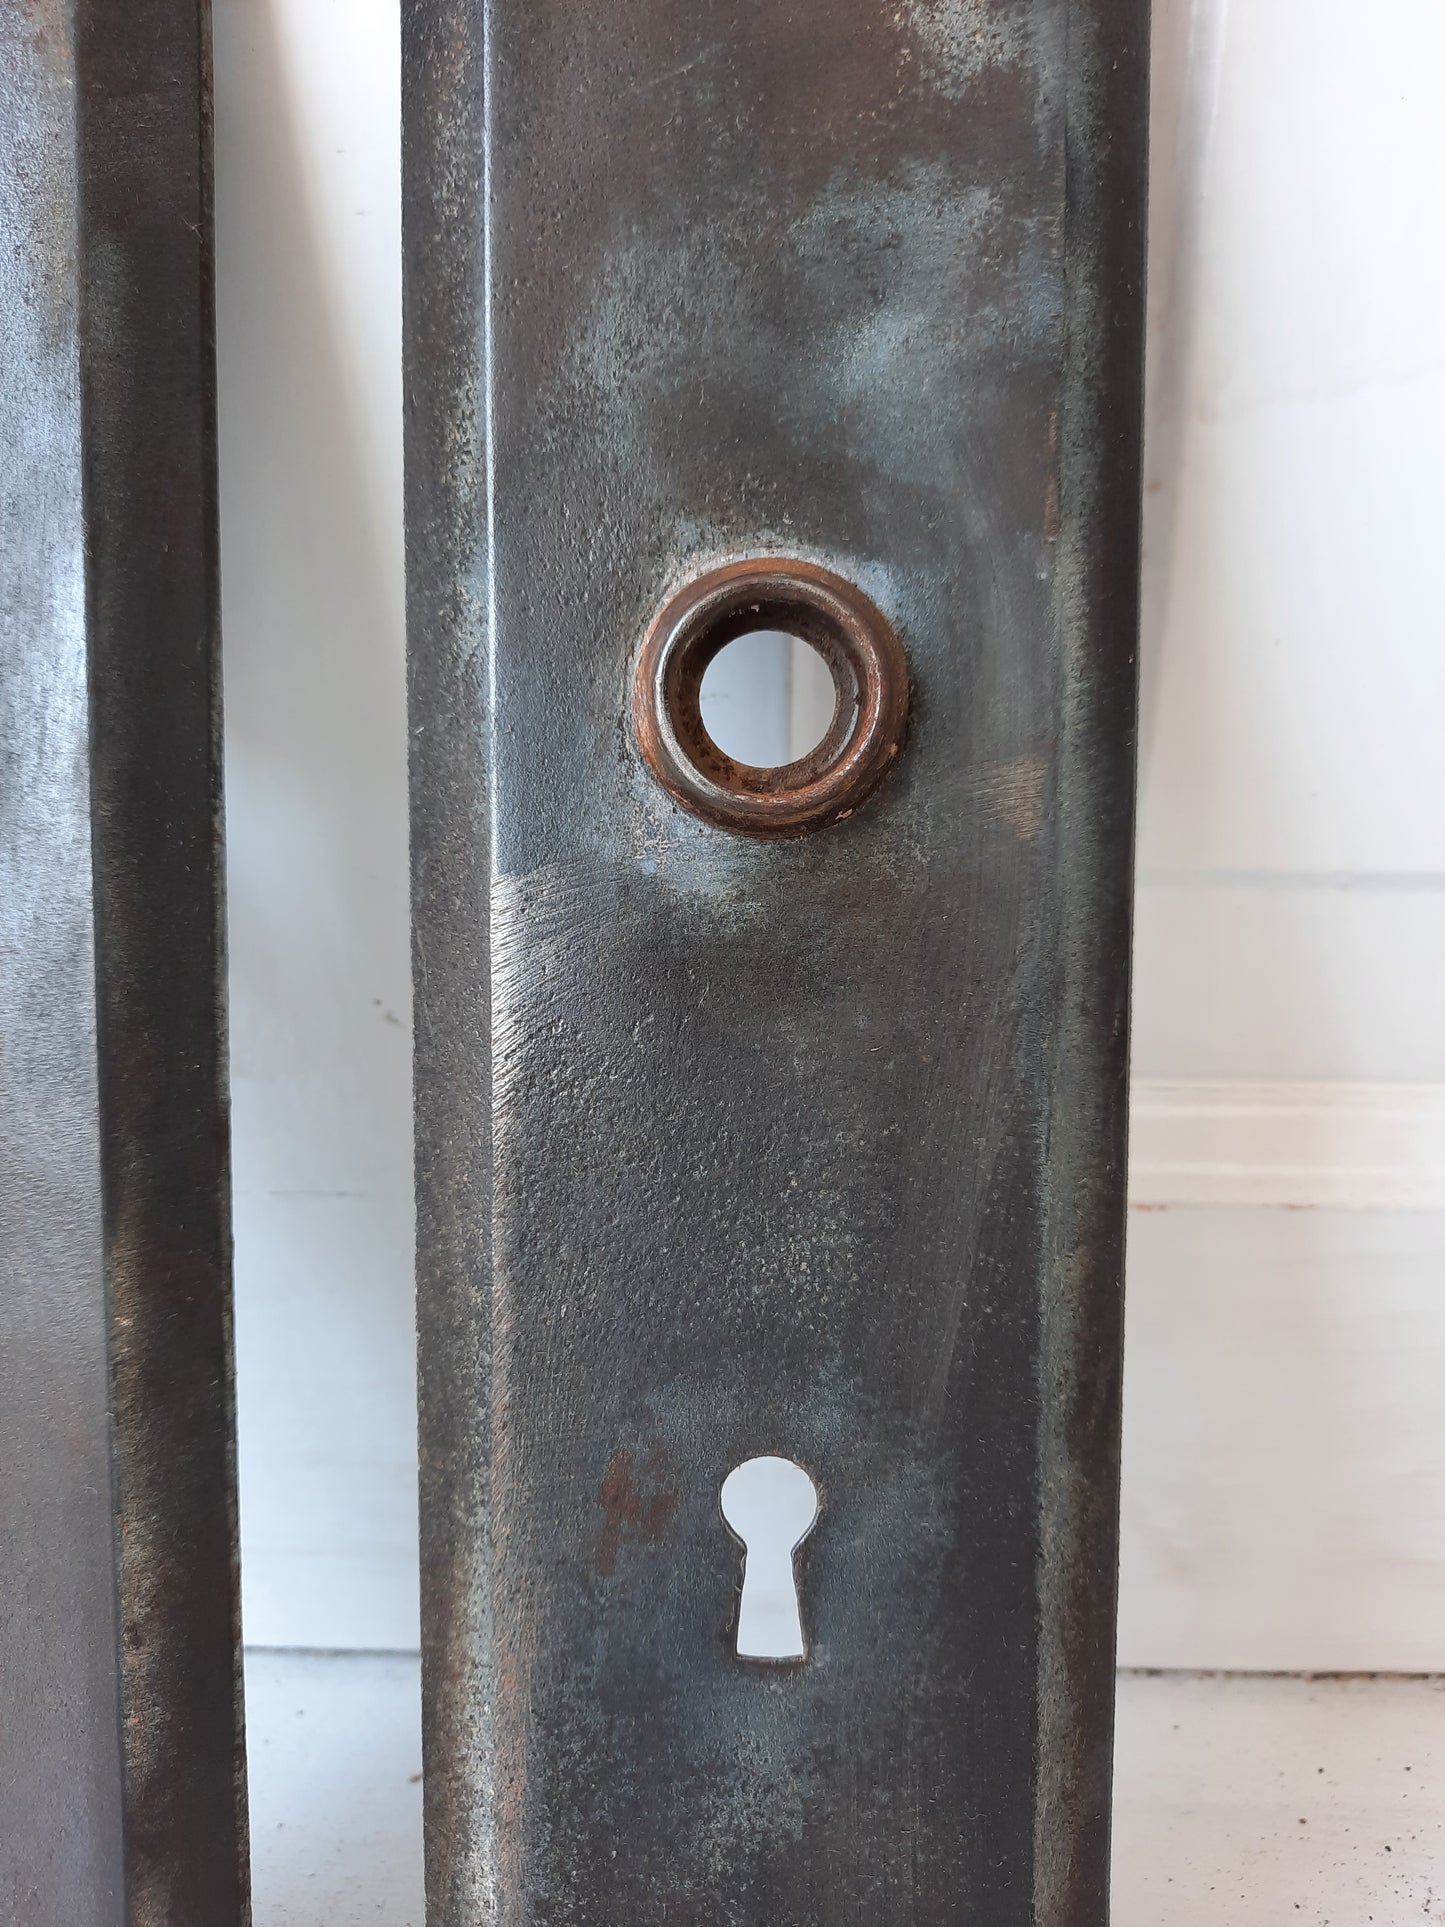 Pair of Large, Plain Antique Door Knob Backplates, Vintage Steel Doorknob Escutcheon Plates